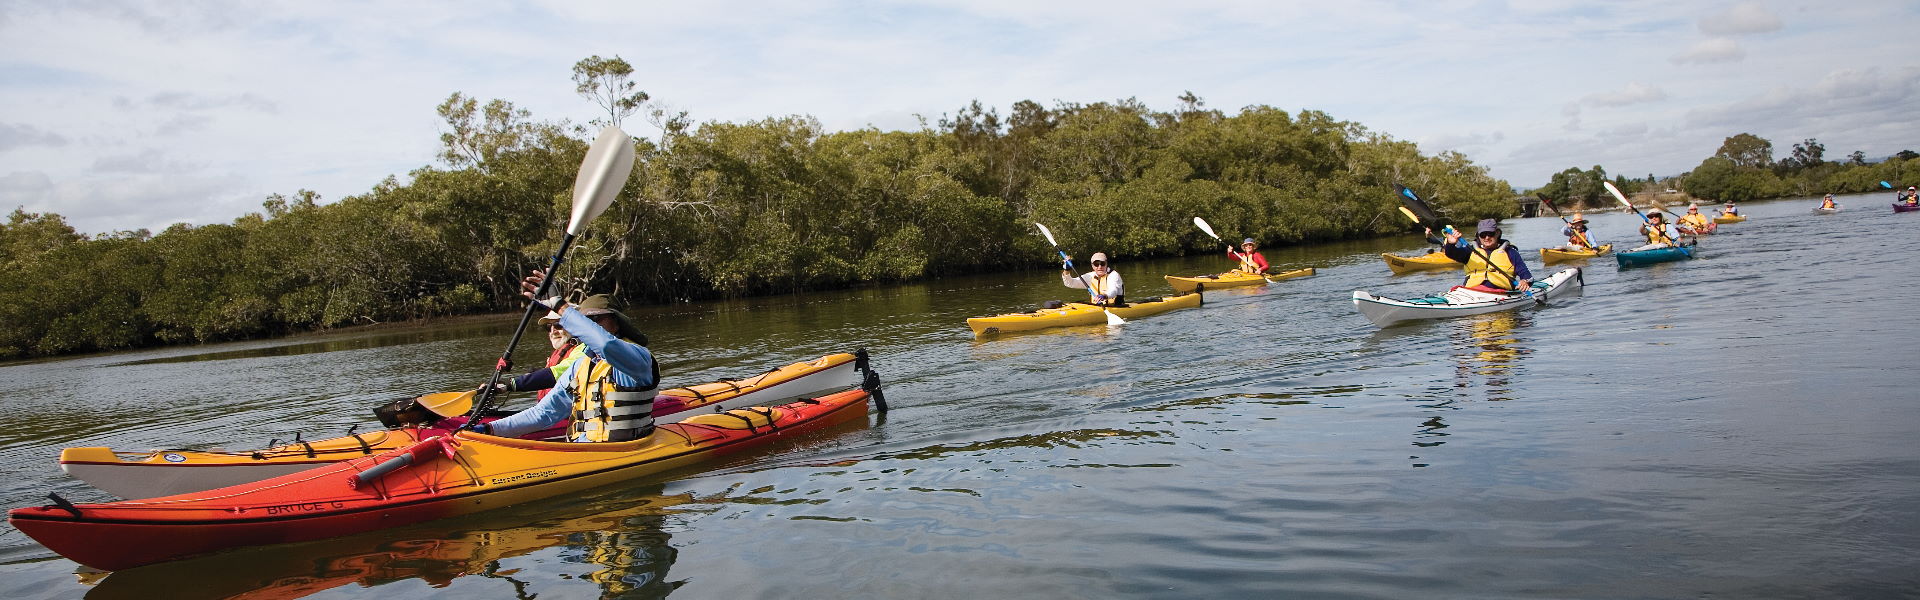 Image showing several people in kayaks